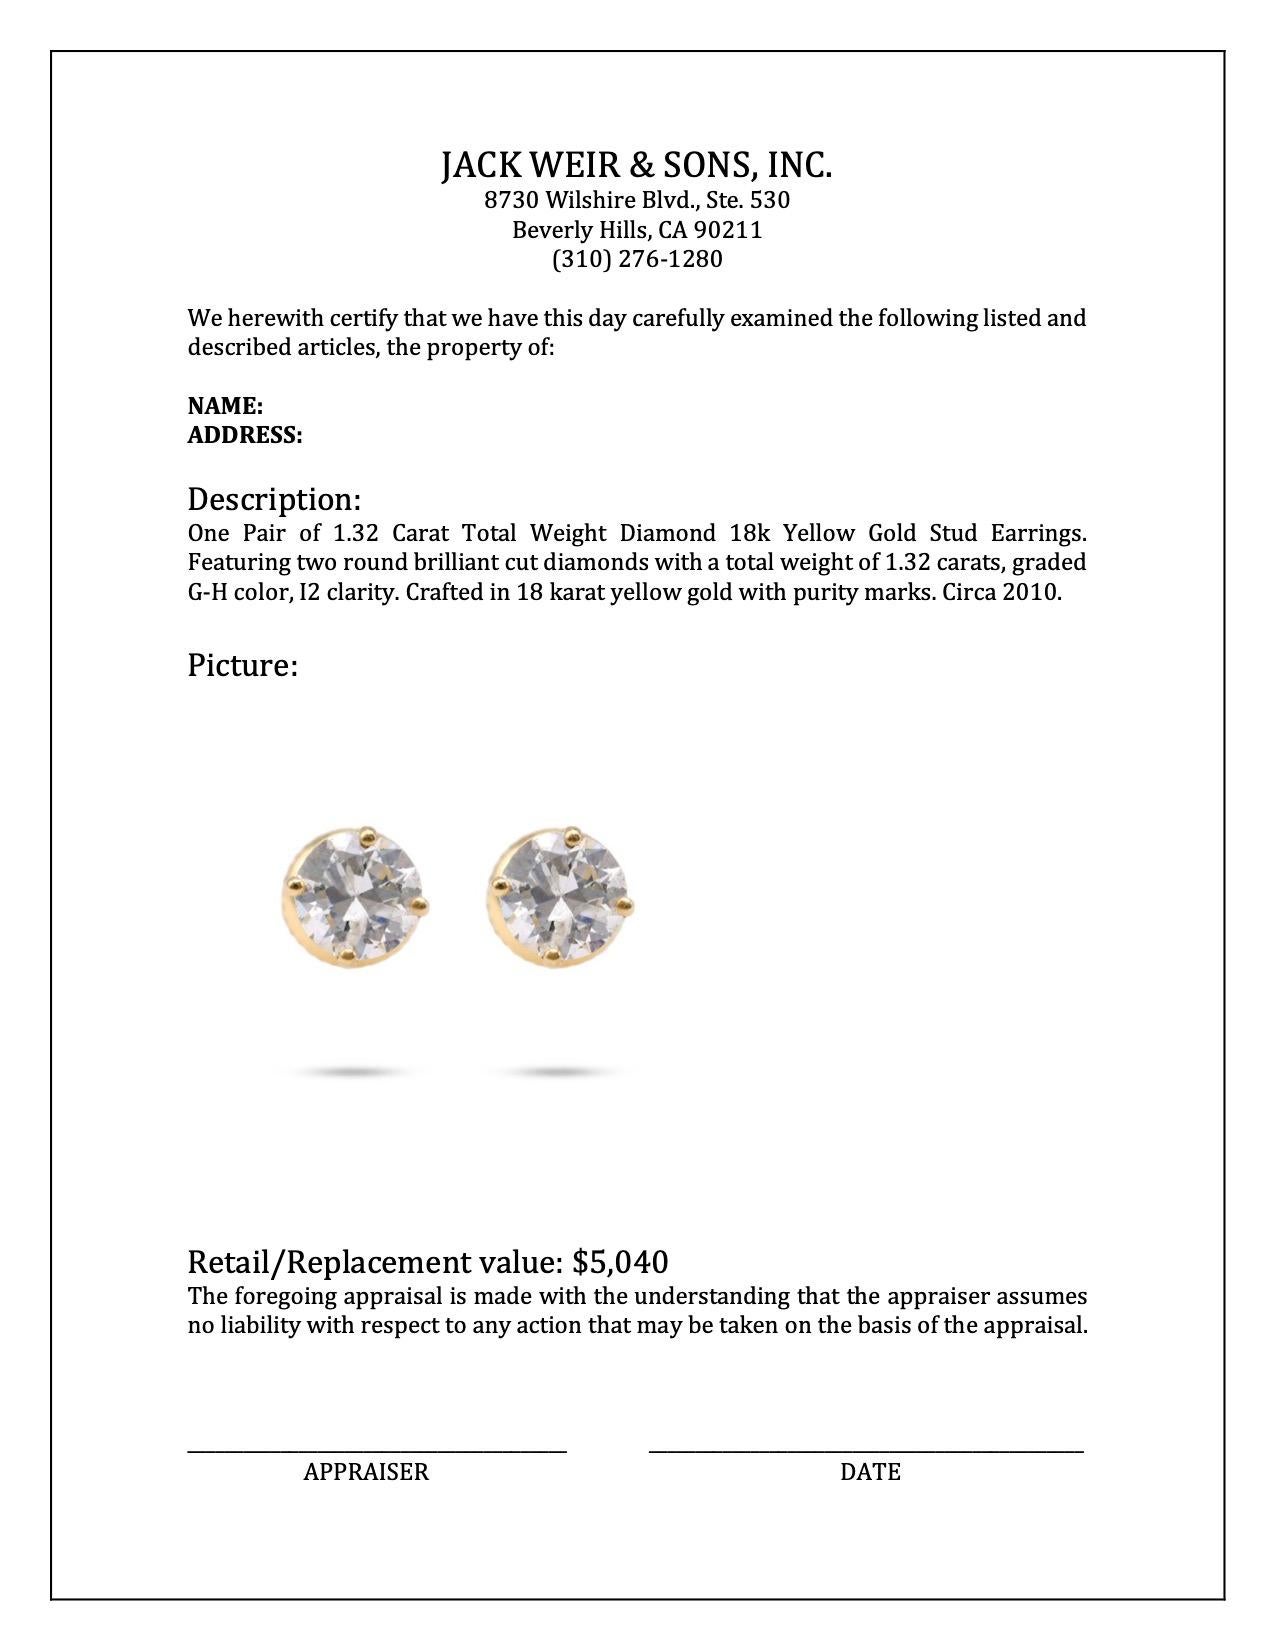 Women's or Men's 1.32 Carat Total Weight Diamond 18k Yellow Gold Stud Earrings For Sale